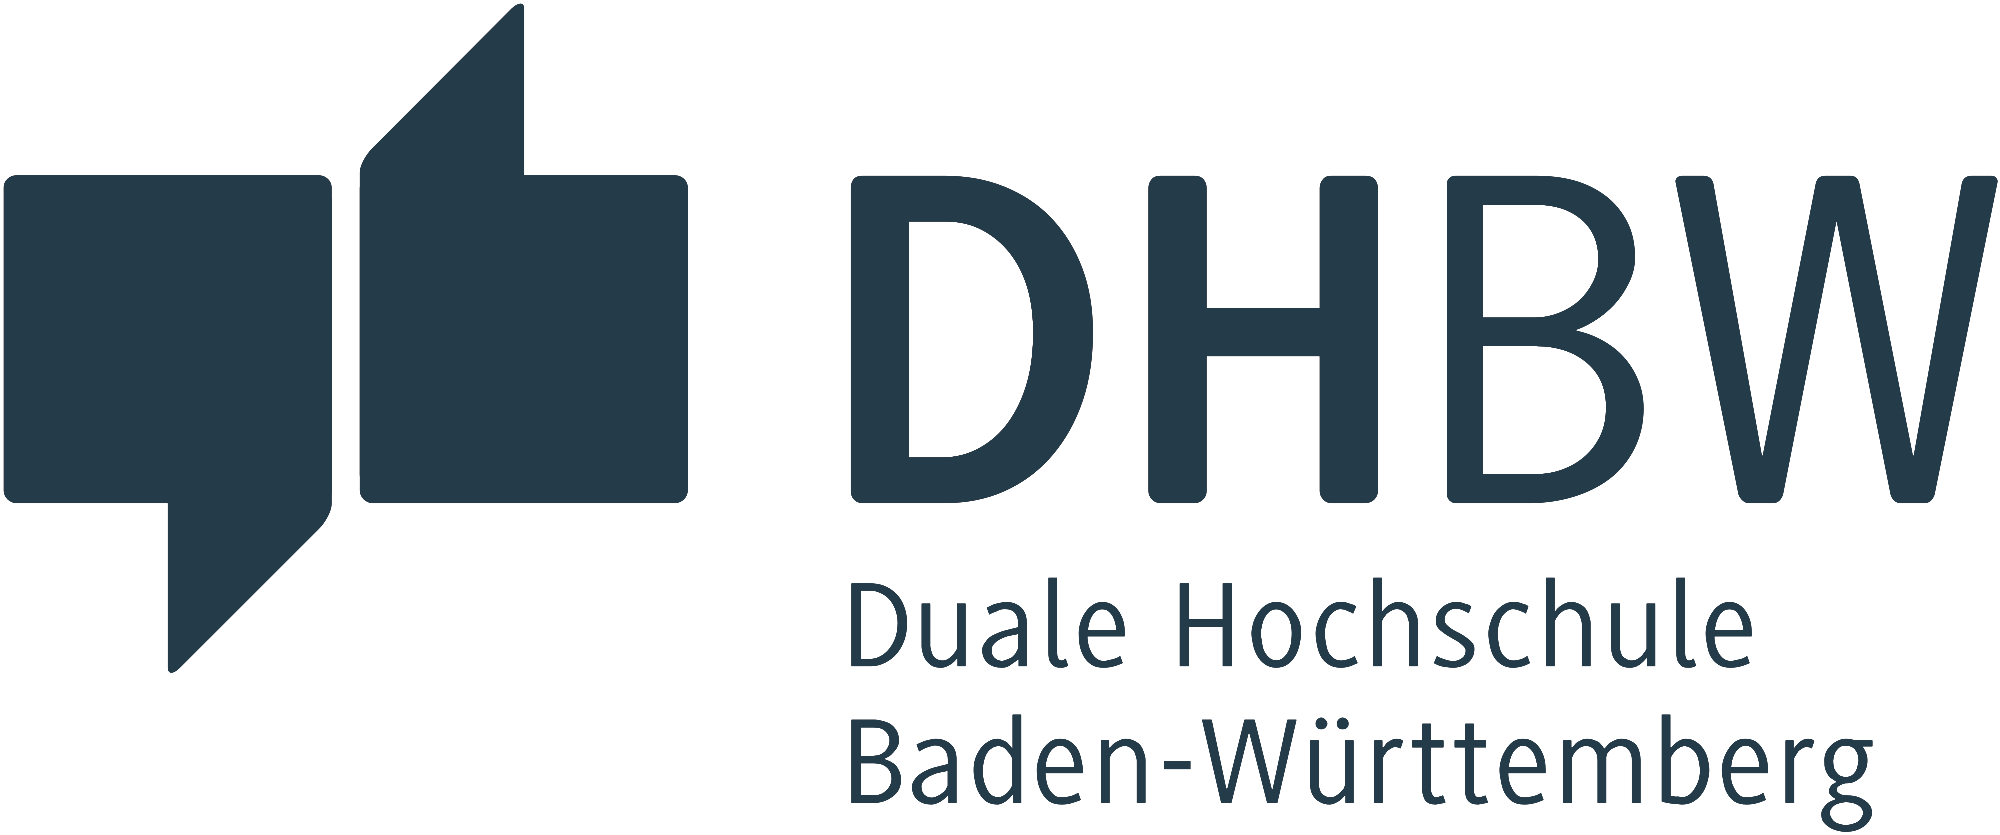 DHBW Baden-Württemberg